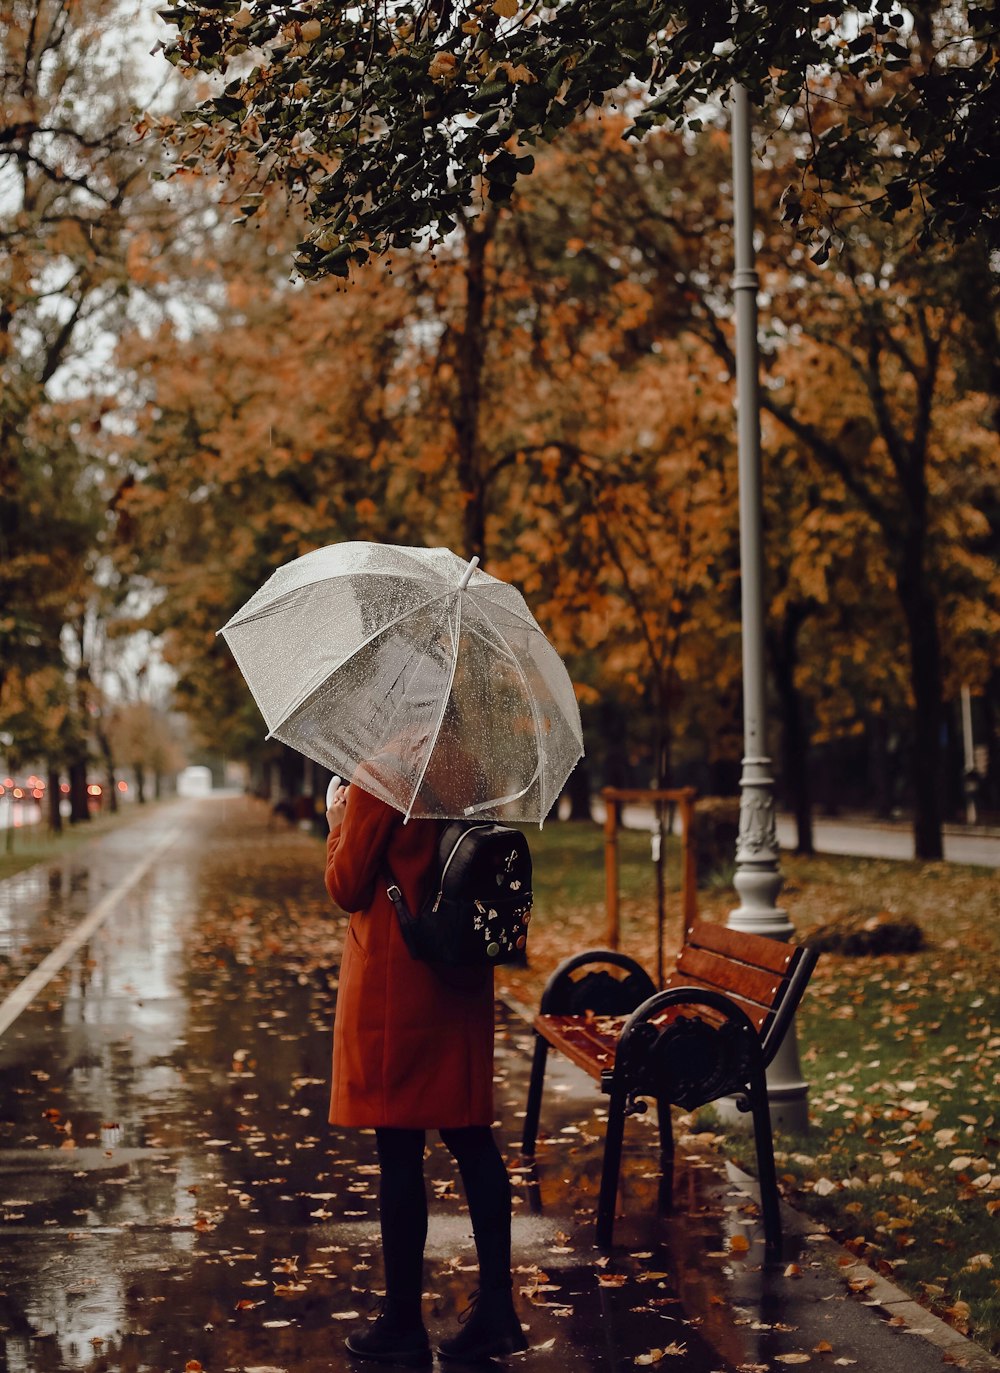 person in orange jacket holding umbrella